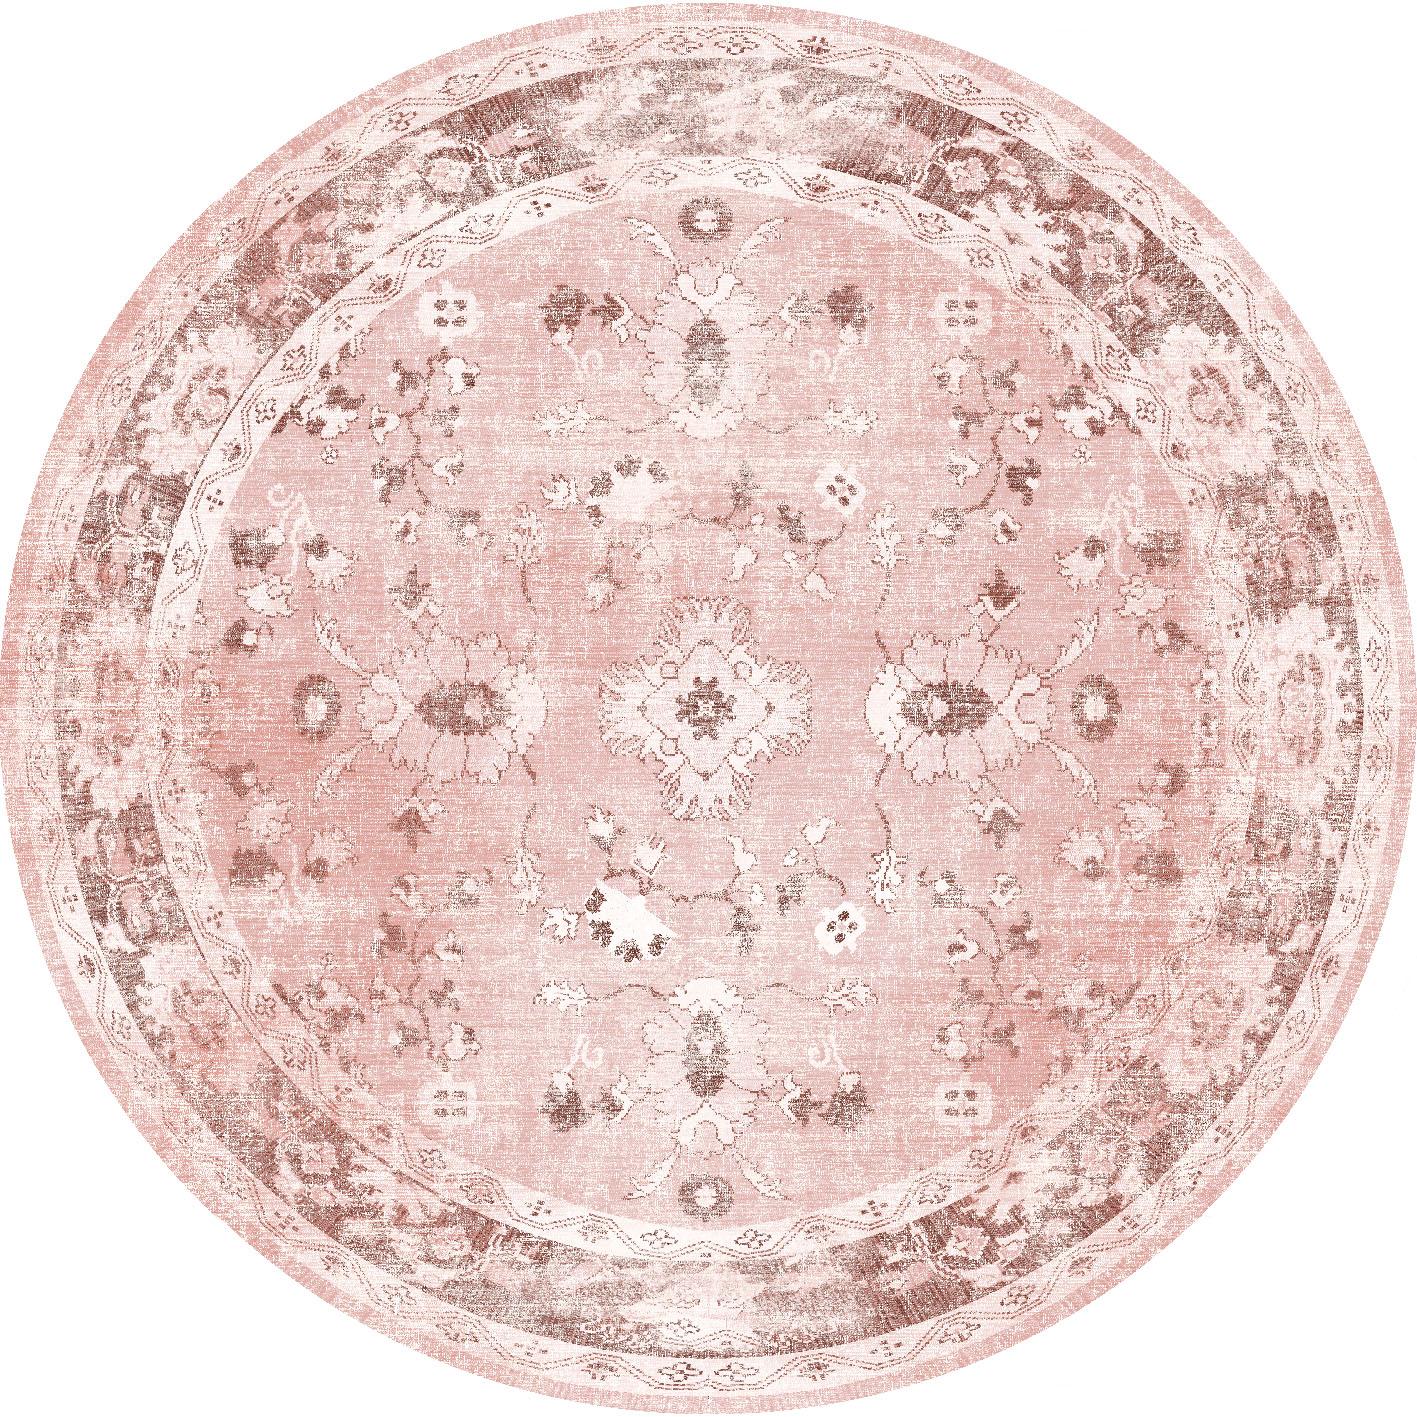 Round rug - Gombalia (pink)